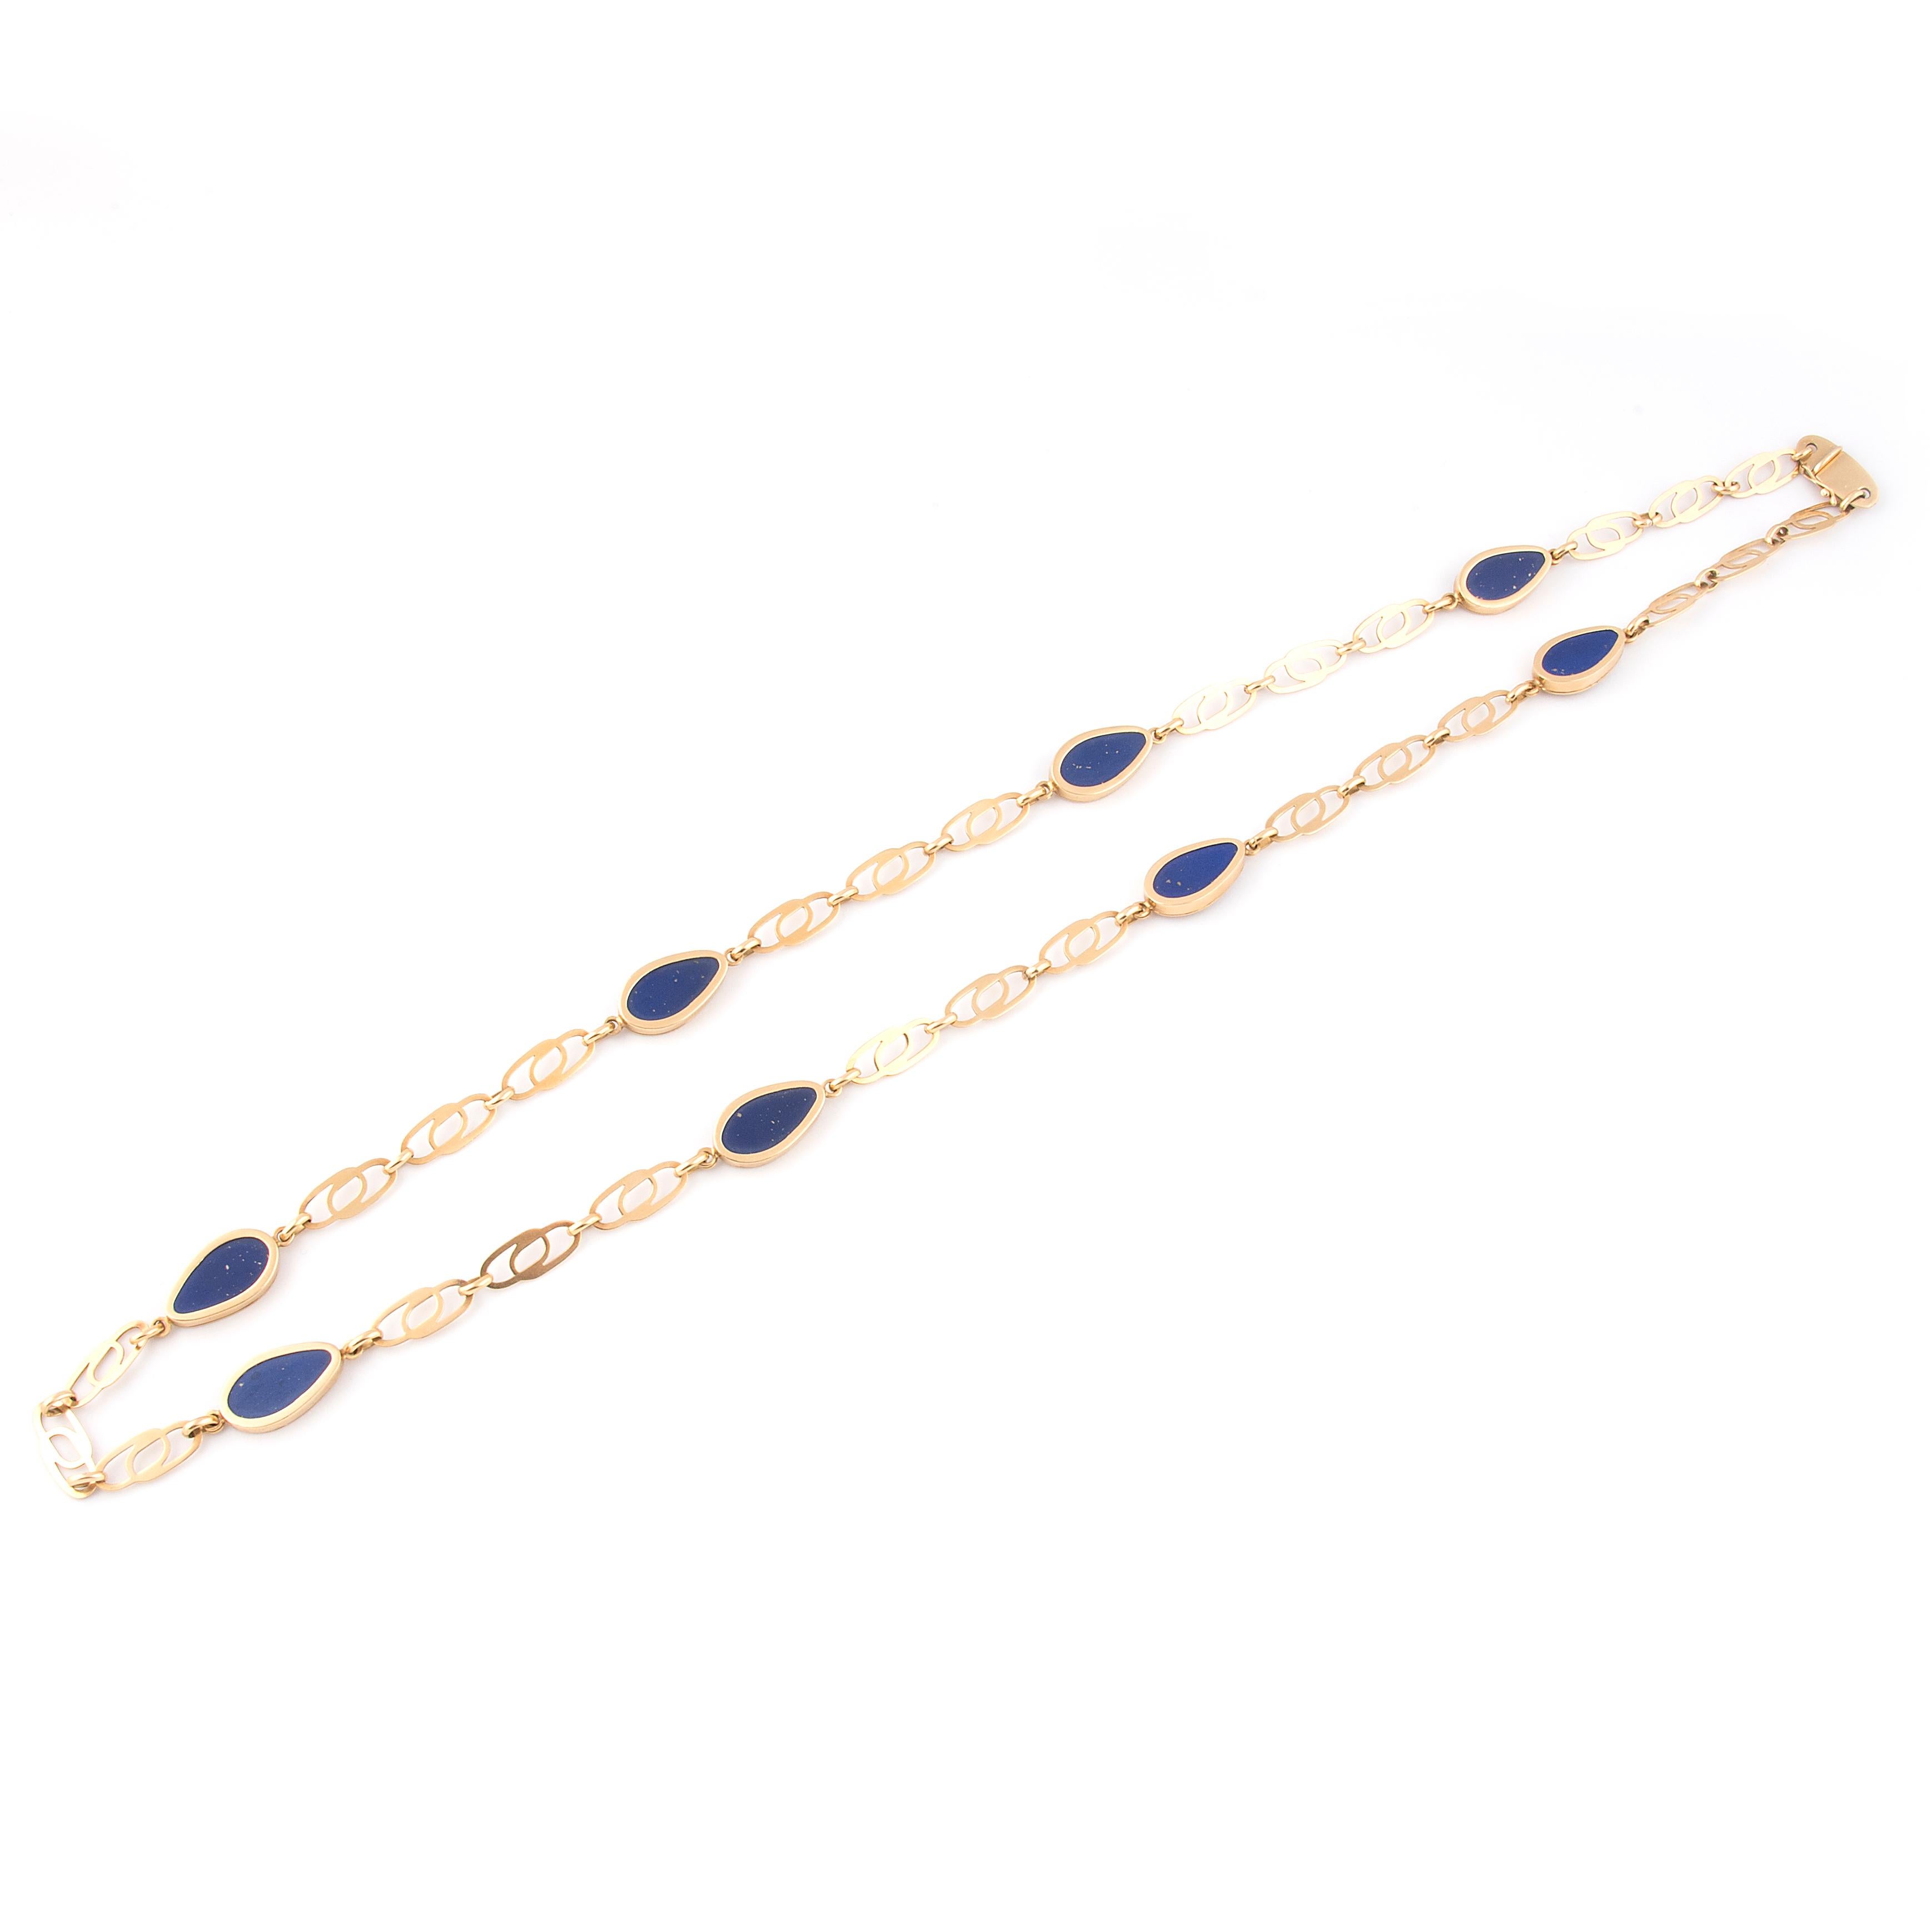 1970s long 'Sautoir' chain necklace by G. Vassellari, the 18k yellow gold links alternated by pear-shaped links set with Lapis Lazuli plaques
Signed G. Vassellari, Italian hallmarks, French import mark
Italian, 1970s